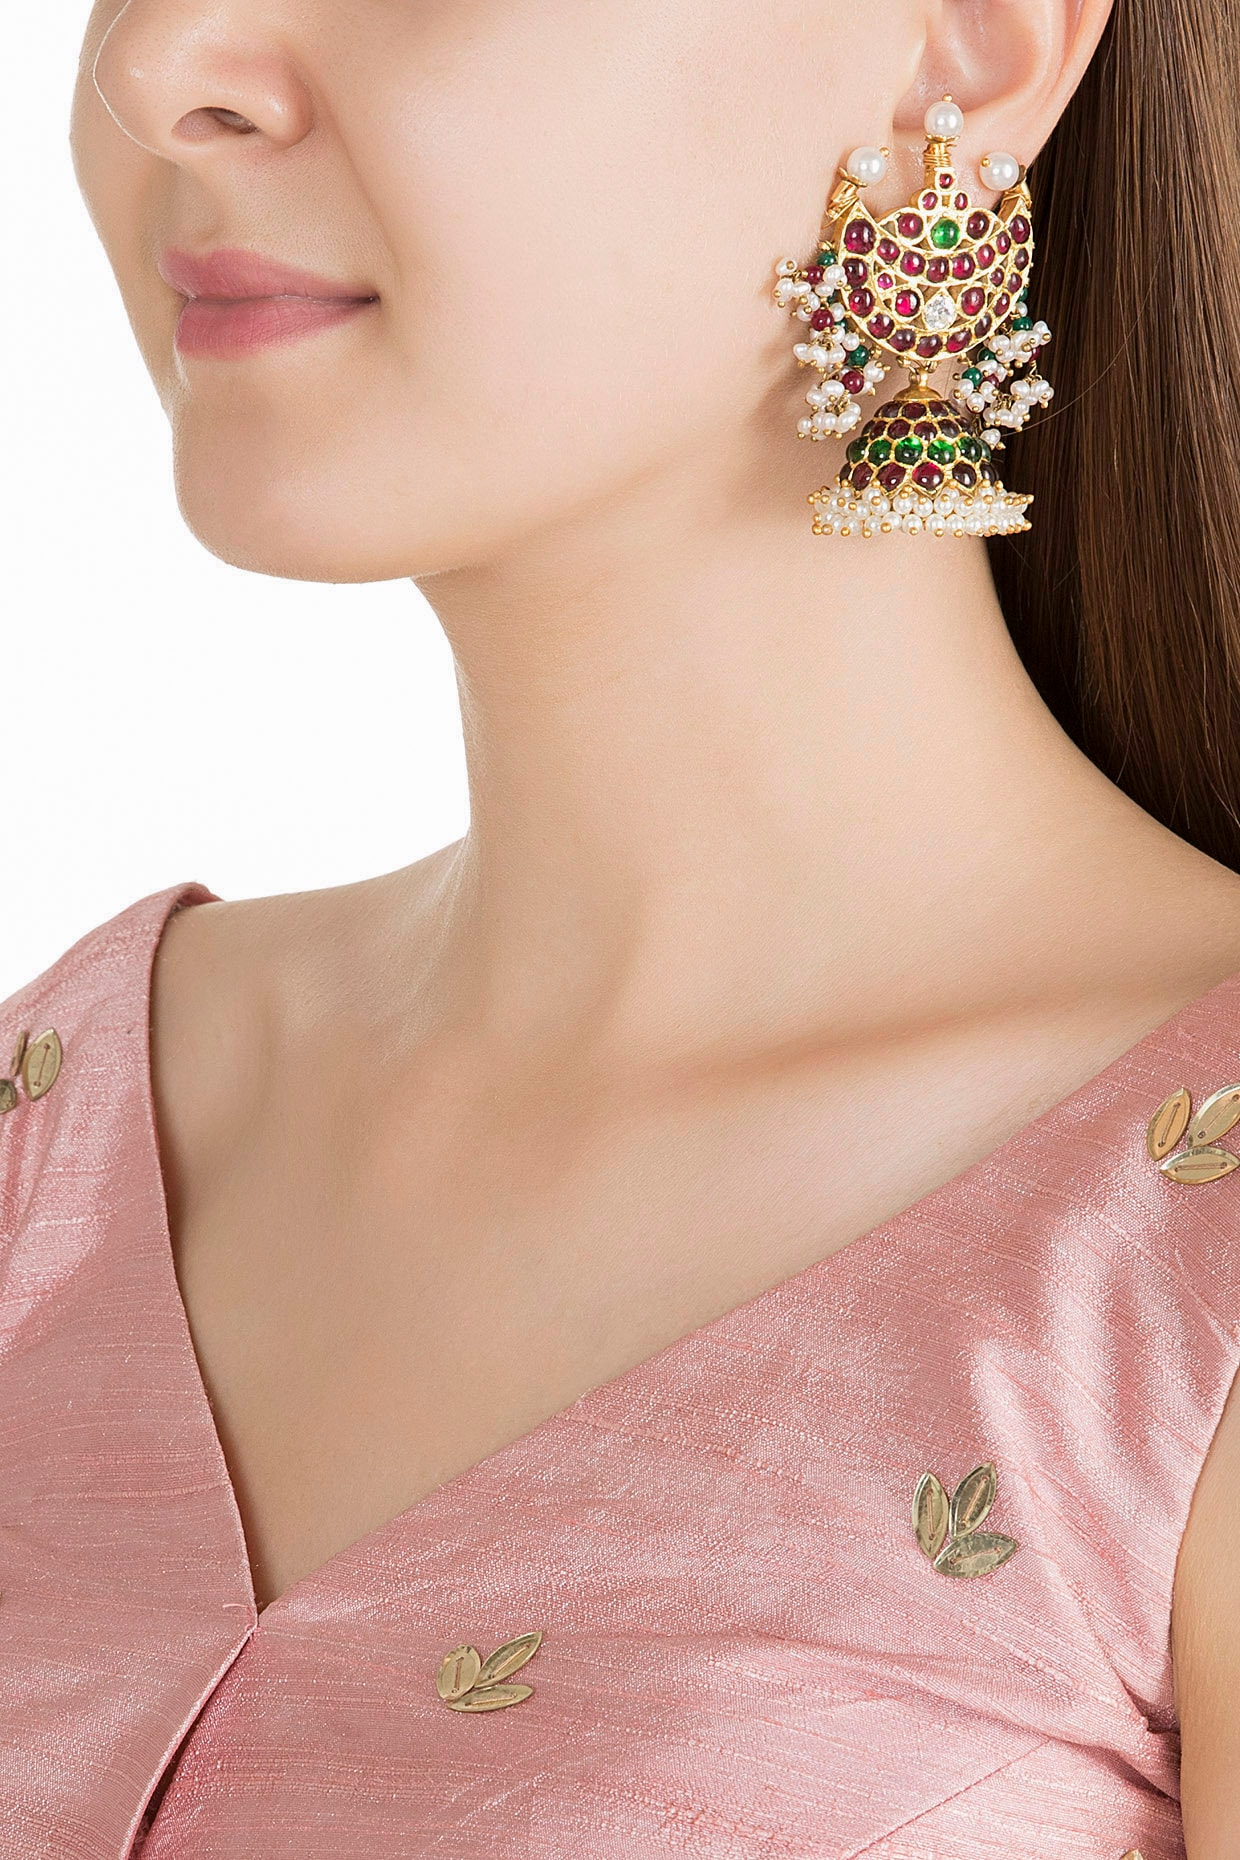 Buy Chandbali Earrings Online In India - Etsy India